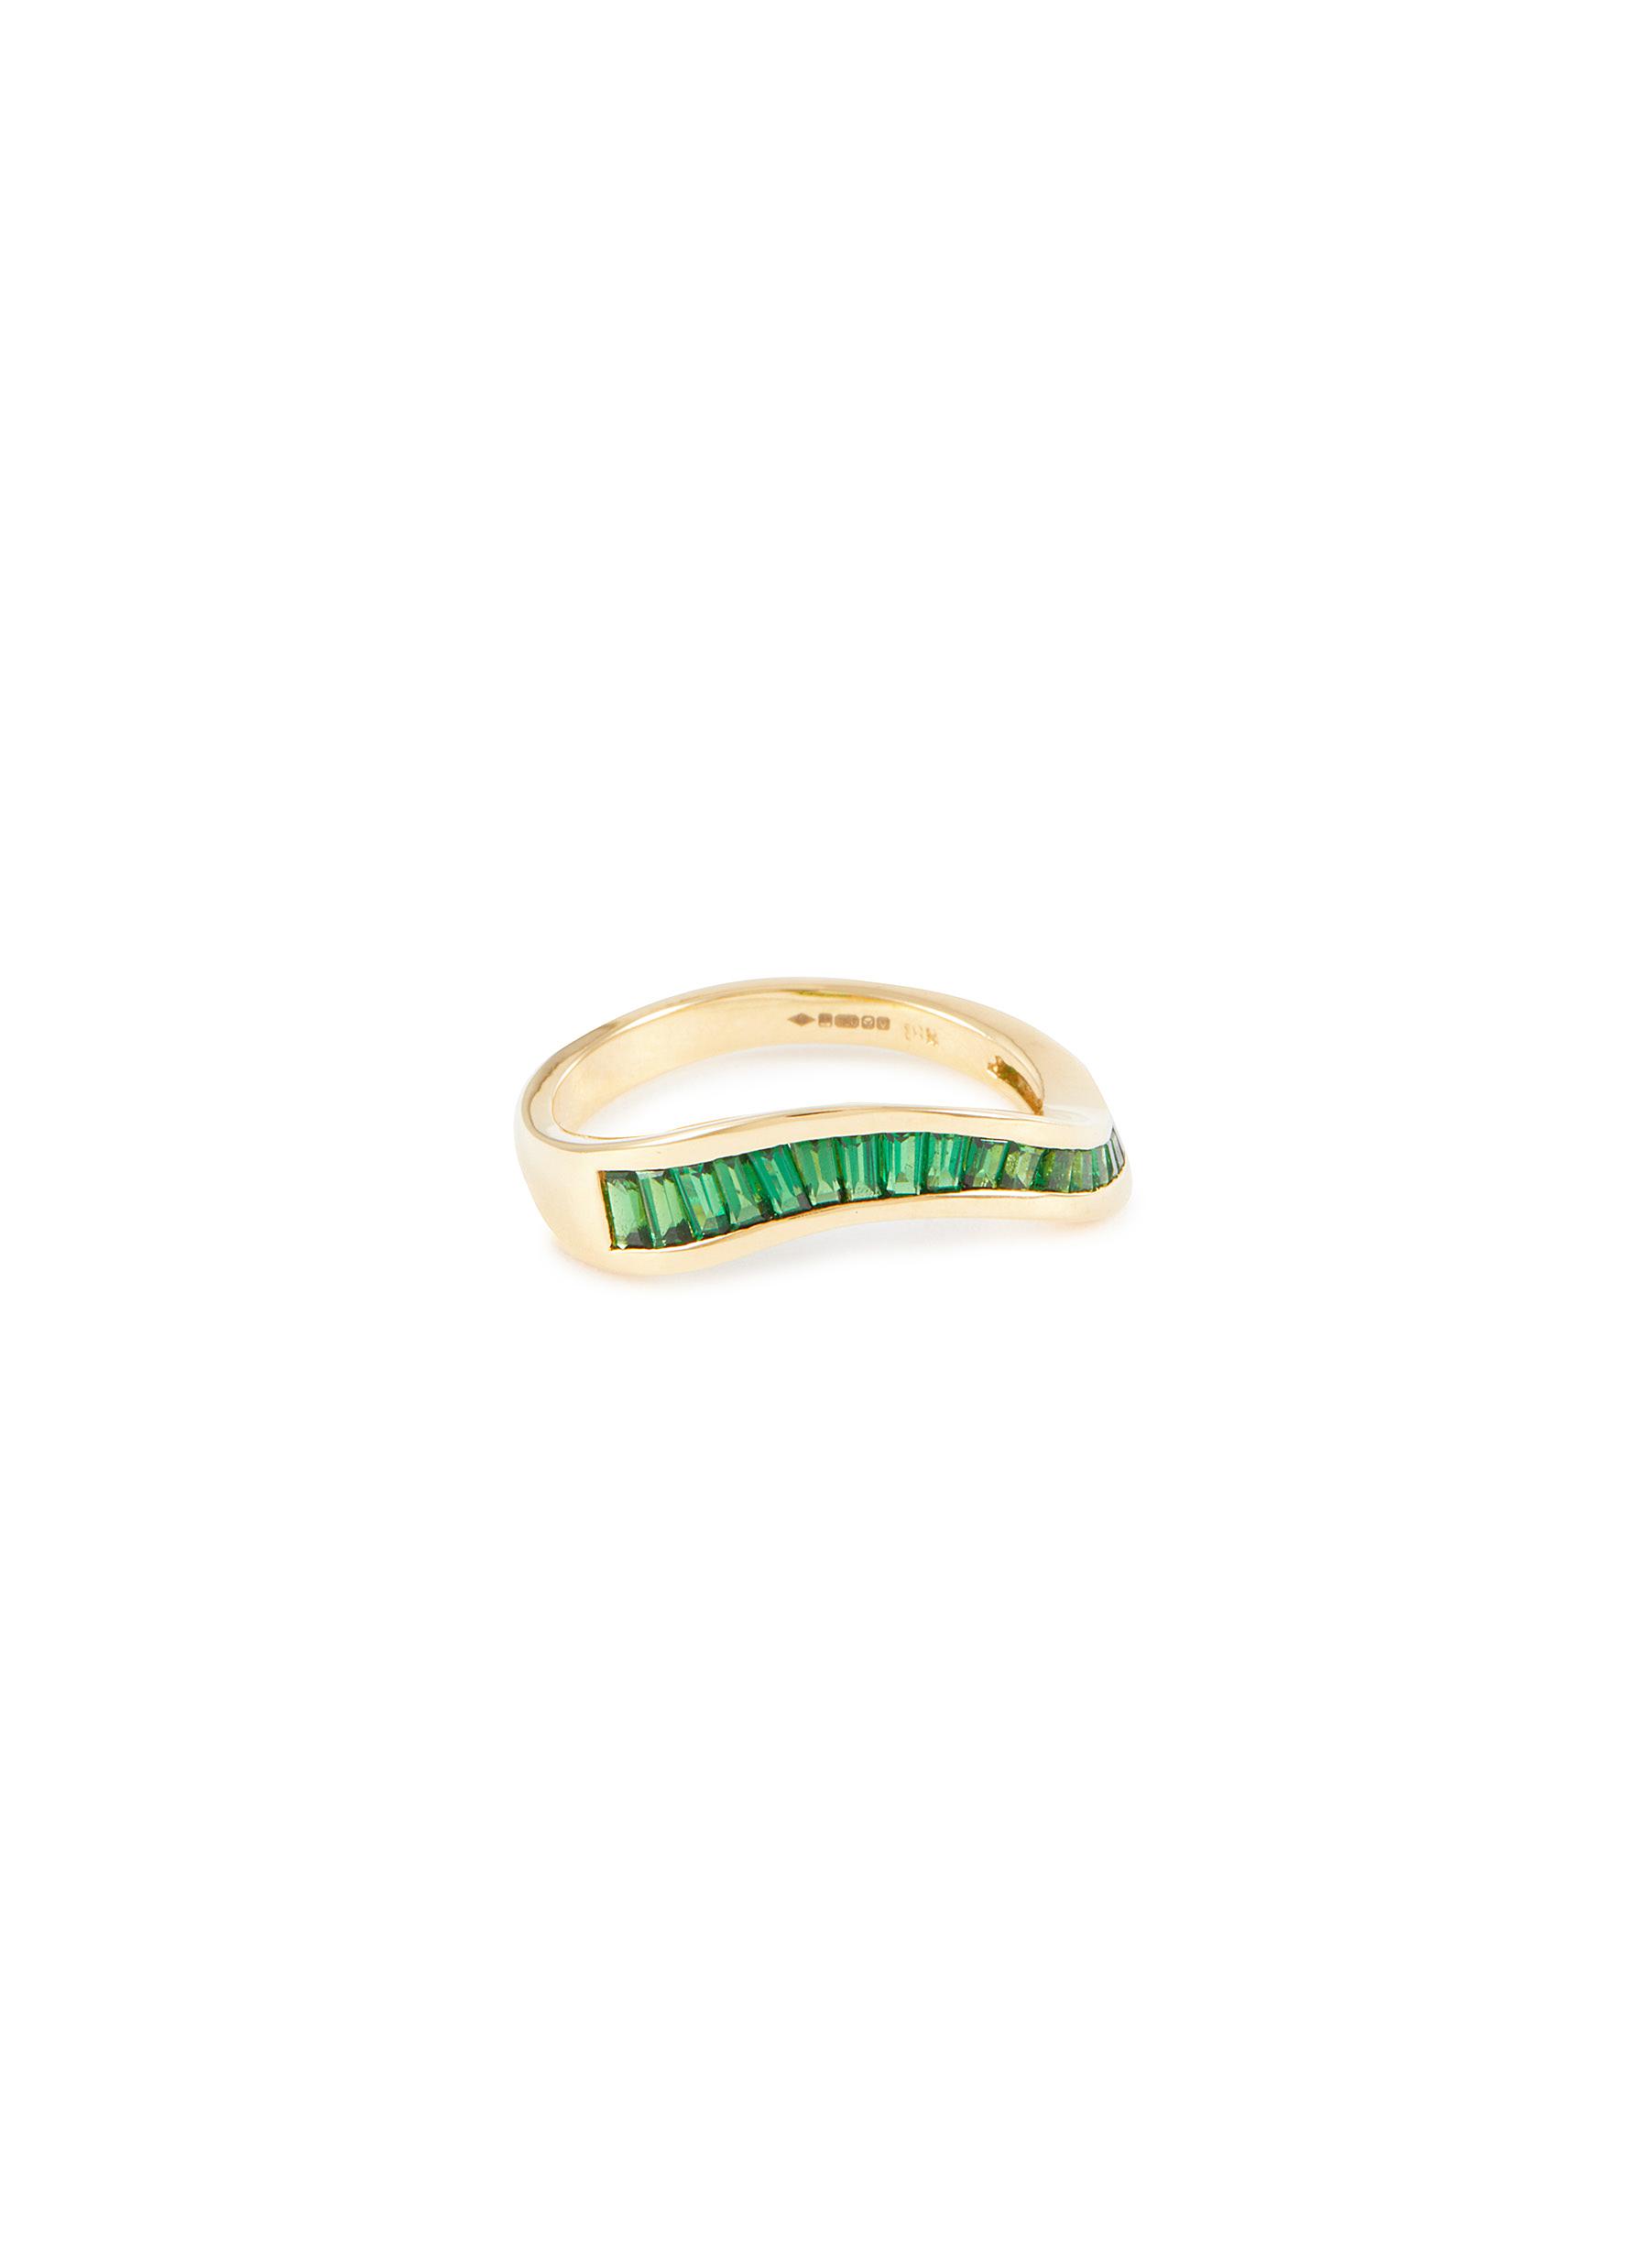 KAVANT & SHARART ‘Talay' Baguette Cut Tsavorite 18K Gold Wave Ring